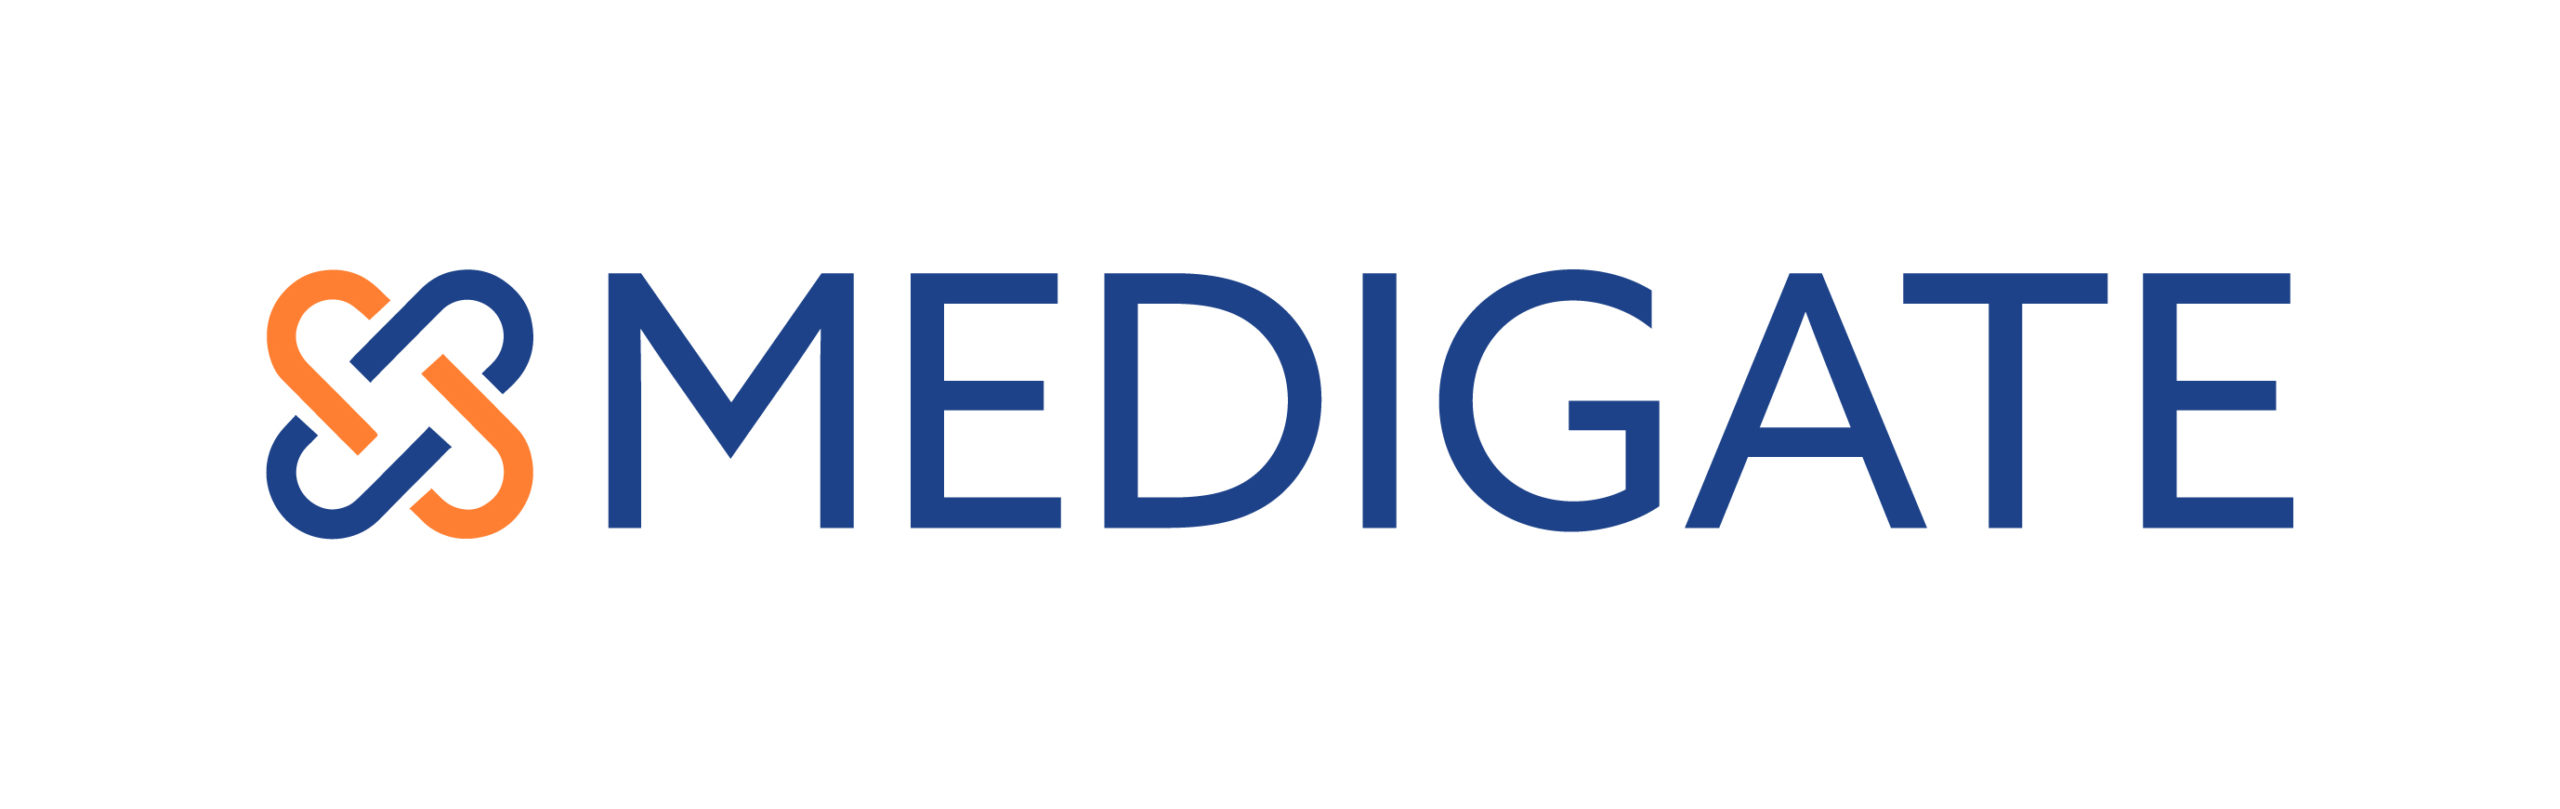 3_Medigate-Logo-RGB-blue-text-orange-chain